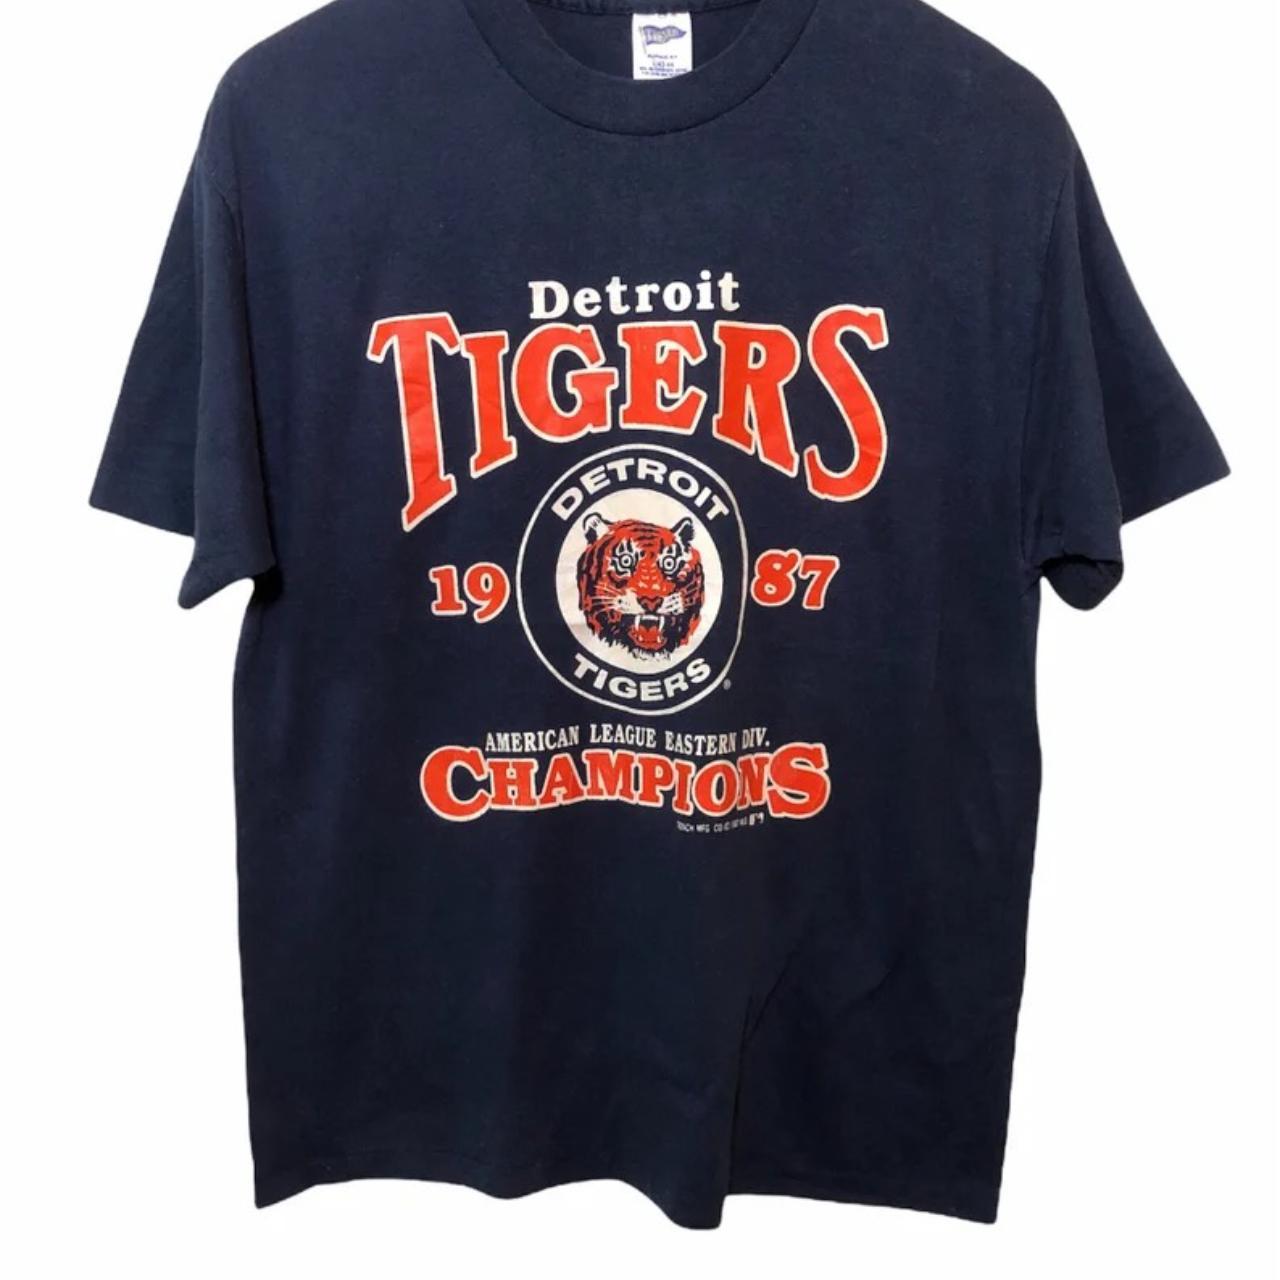 Vintage 80's Mlb Baseball Champion Detroit Tigers Men's T-Shirt